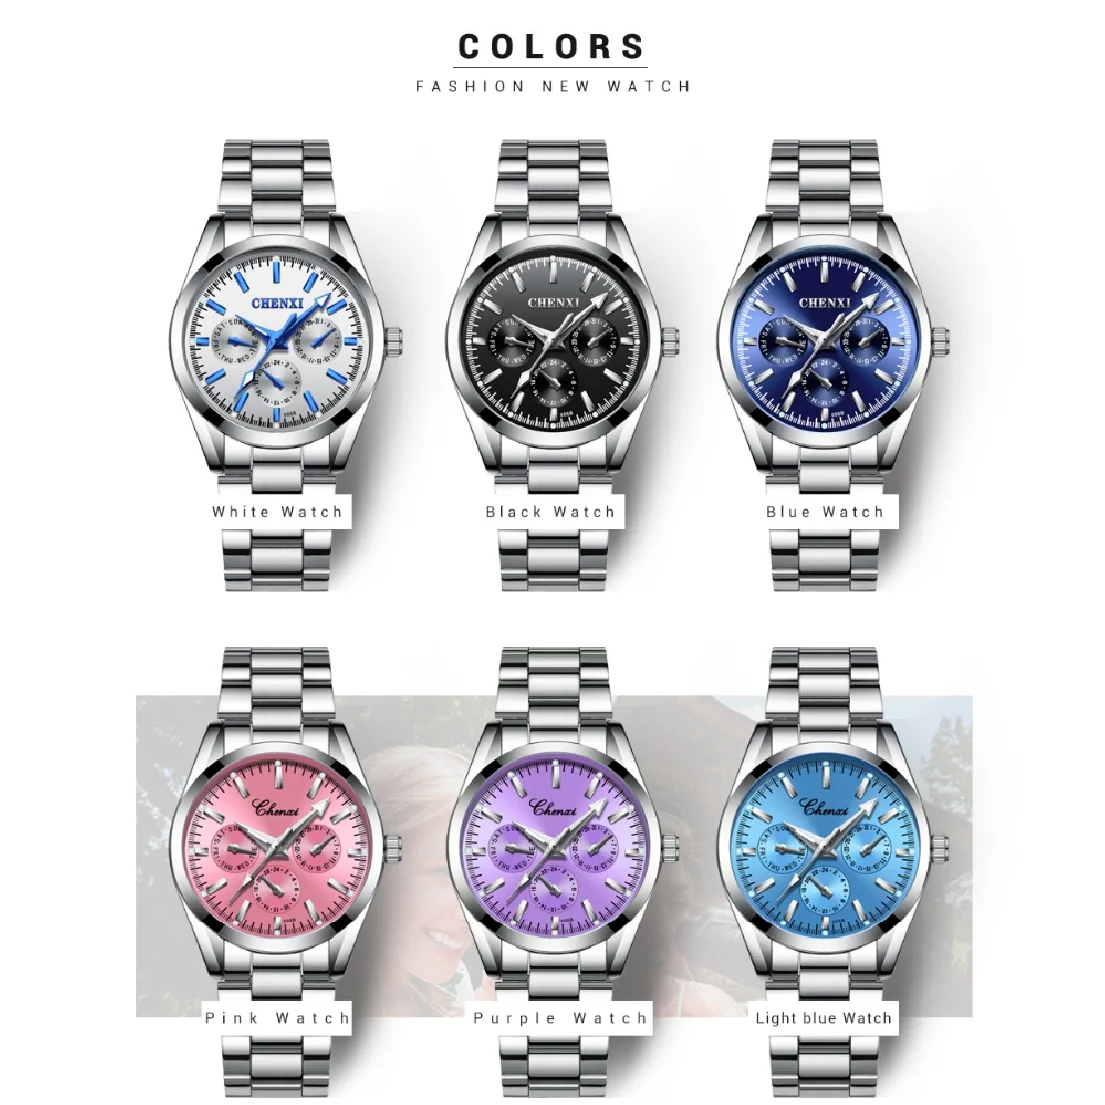 CHENXI Luxury Stainless Steel Watch For Women Pink Ladies Business Analog Watches Quartz Movement Relogio Feminino enlarge